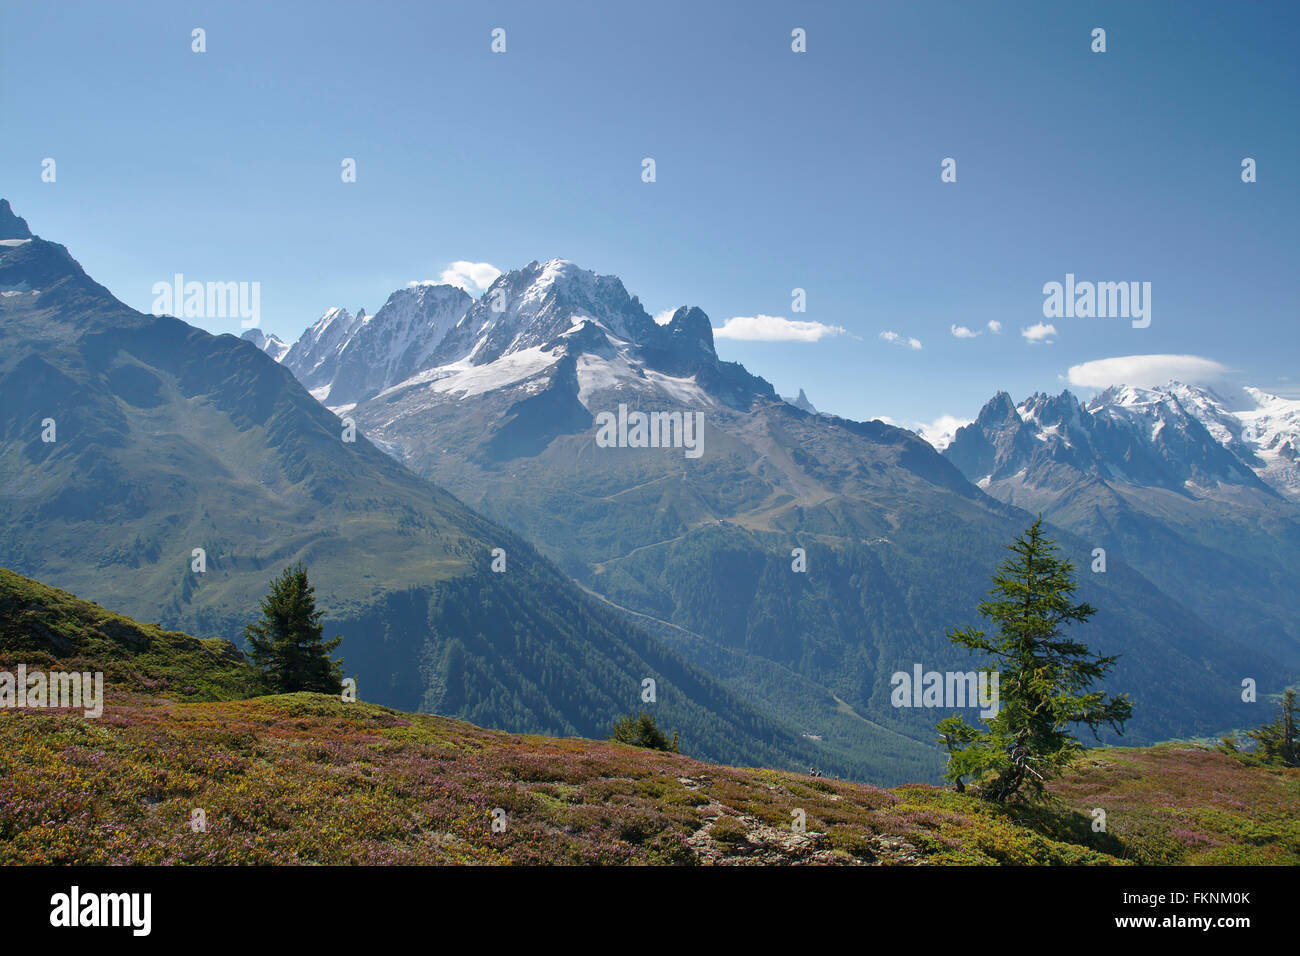 Aiguille Verte fom Balme, Mont Blanc Massif, France Stock Photo